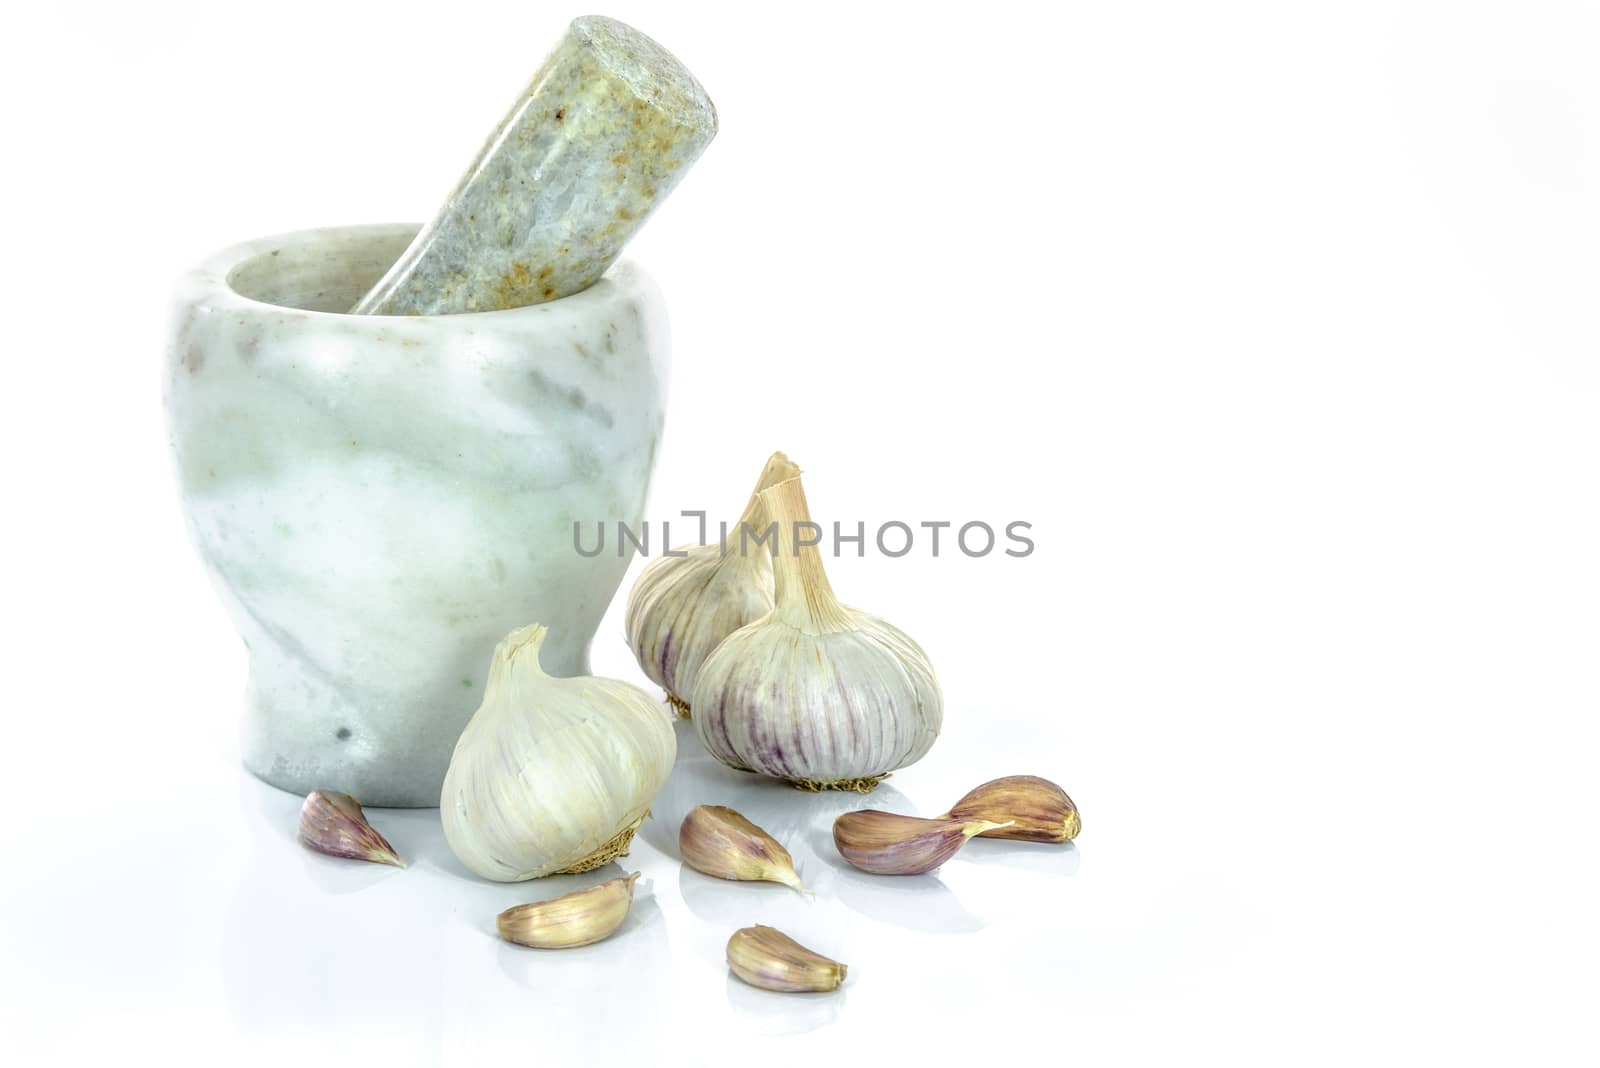 Garlic as a source of health by wdnet_studio